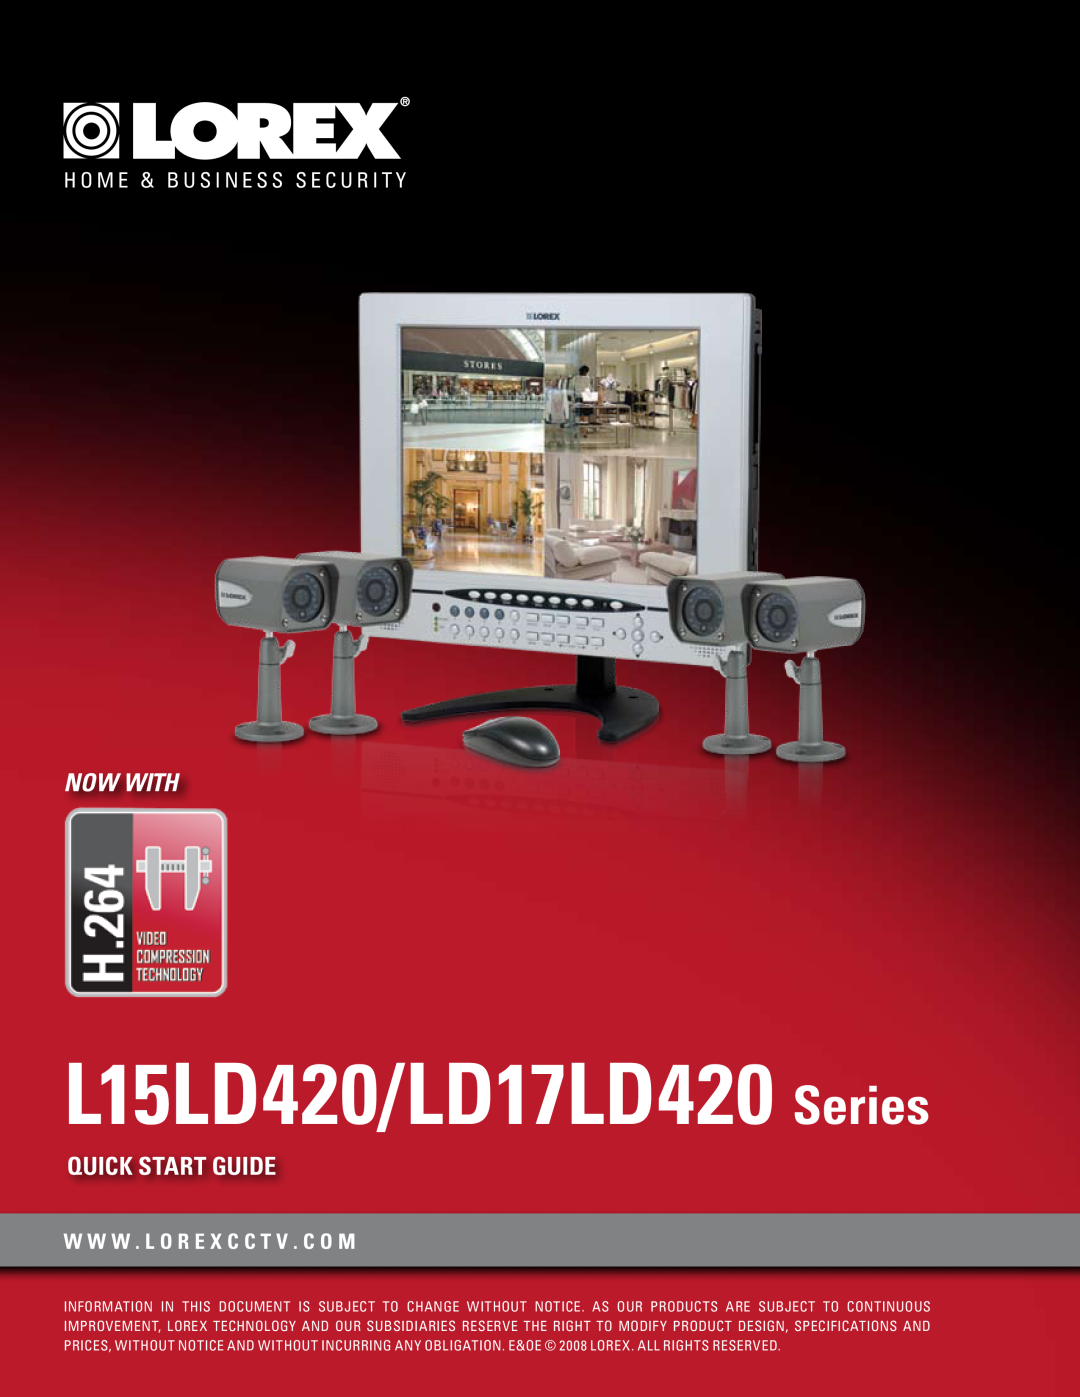 LOREX Technology specifications Now with, W W W . L O R E X C C T V . C O M, L15LD420/LD17LD420 Series 